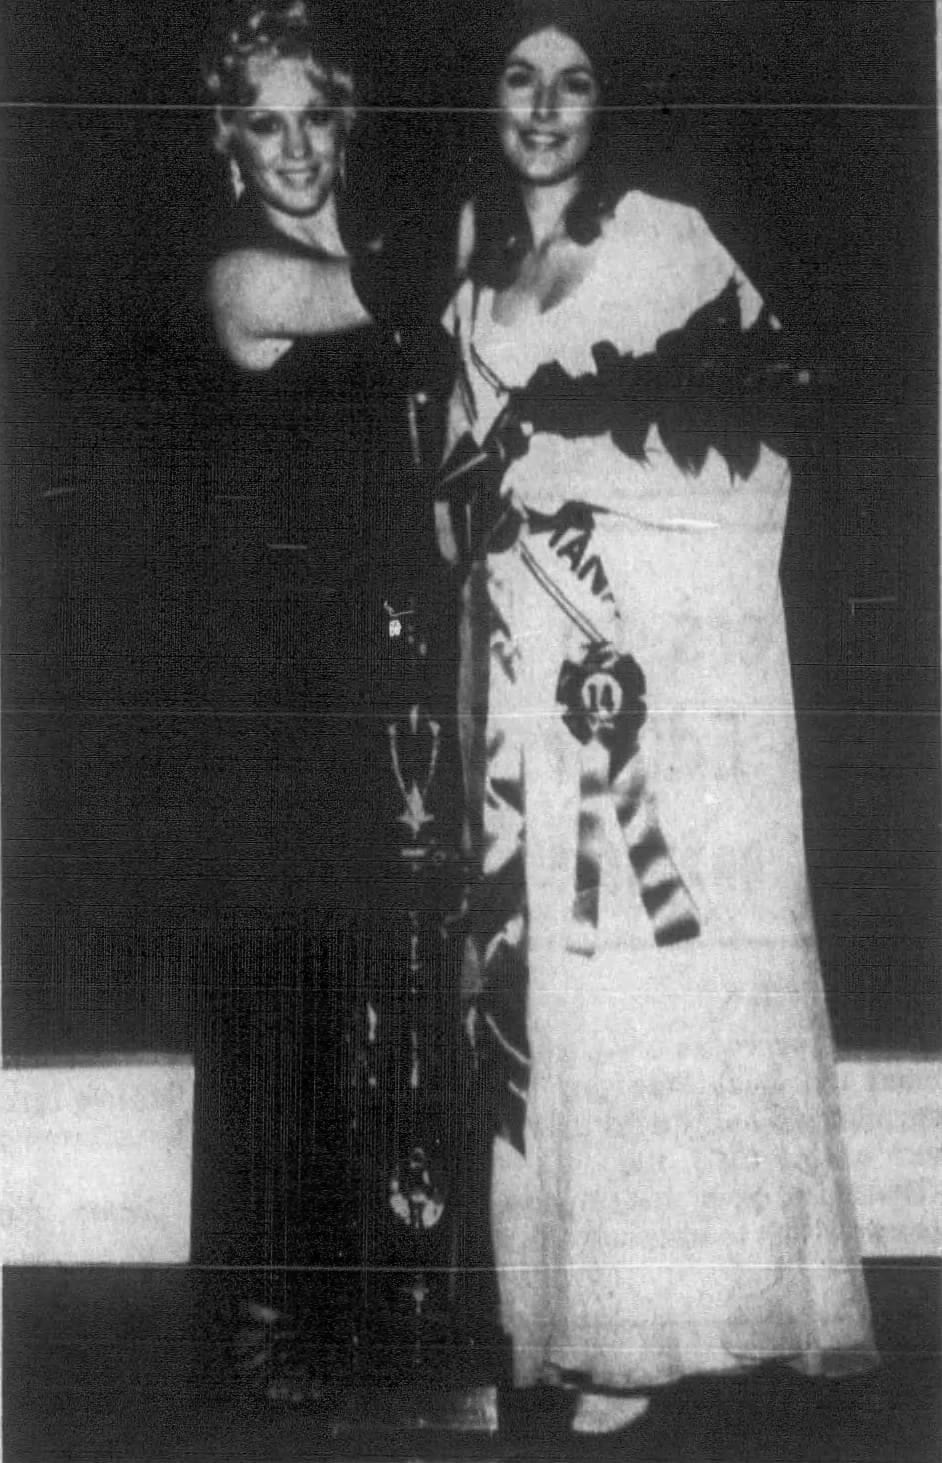 Diana Risenstein is crowned Miss Louisiana USA 1971